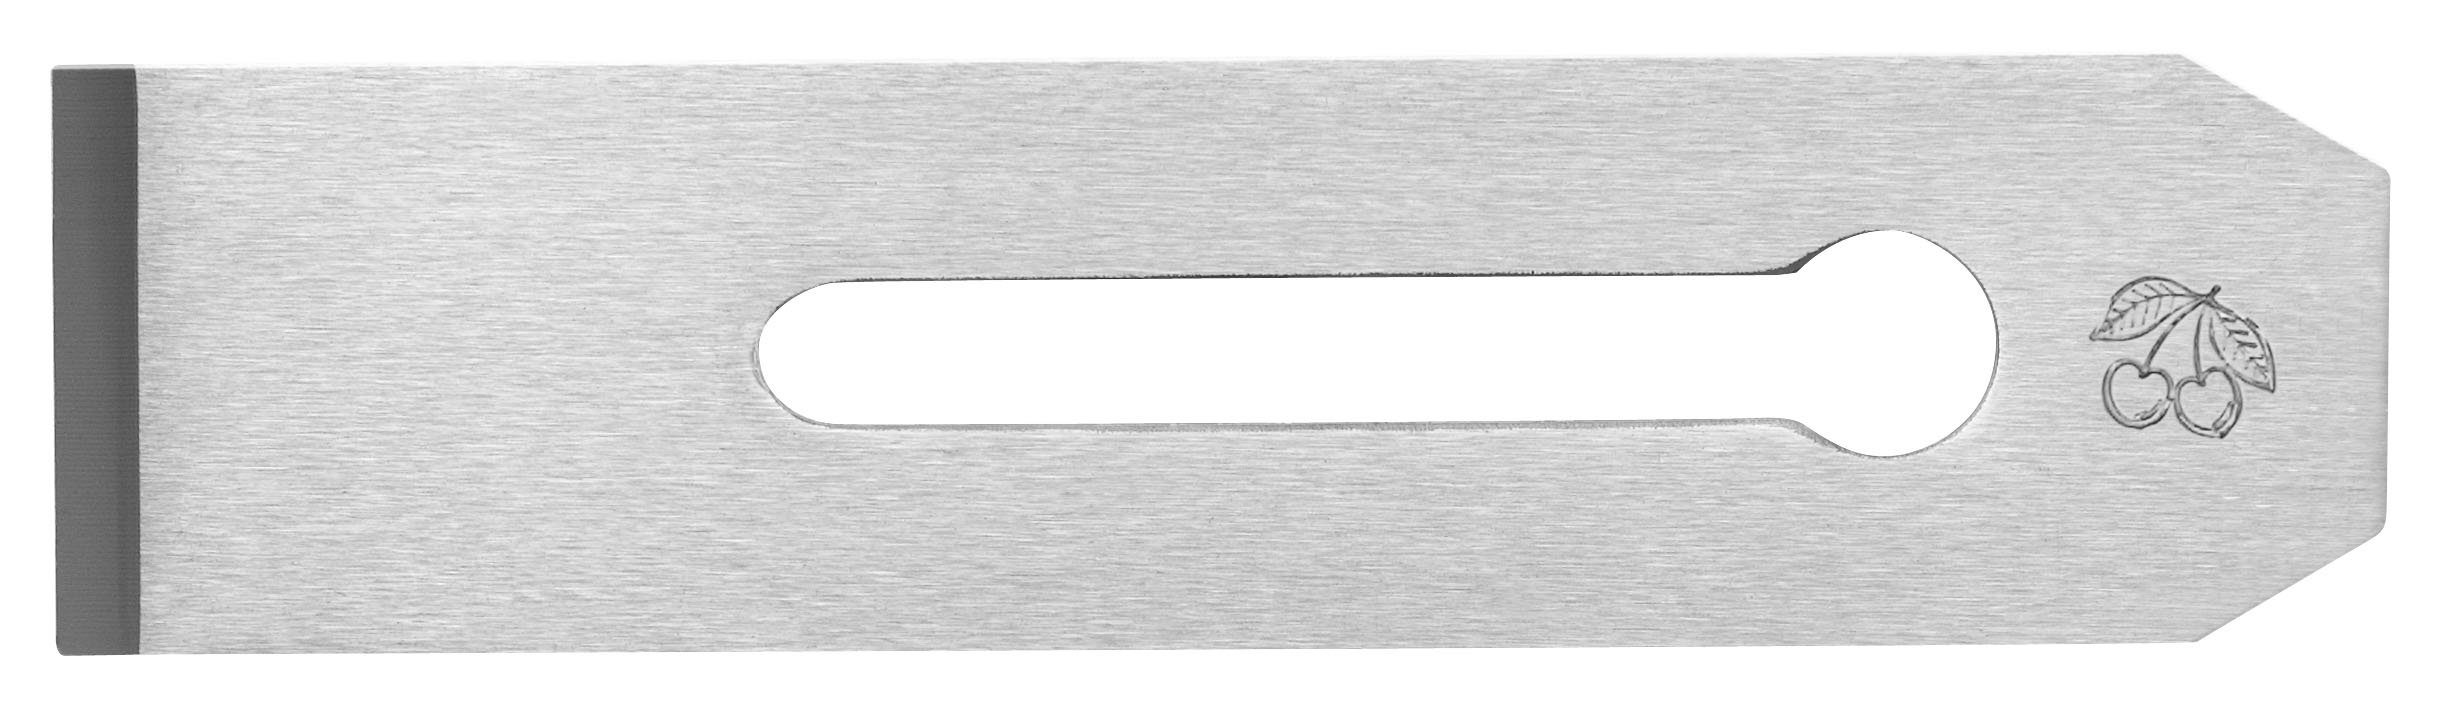 48mm KIRSCHEN Lochhobeleisen Kirschen - Hobelmesser